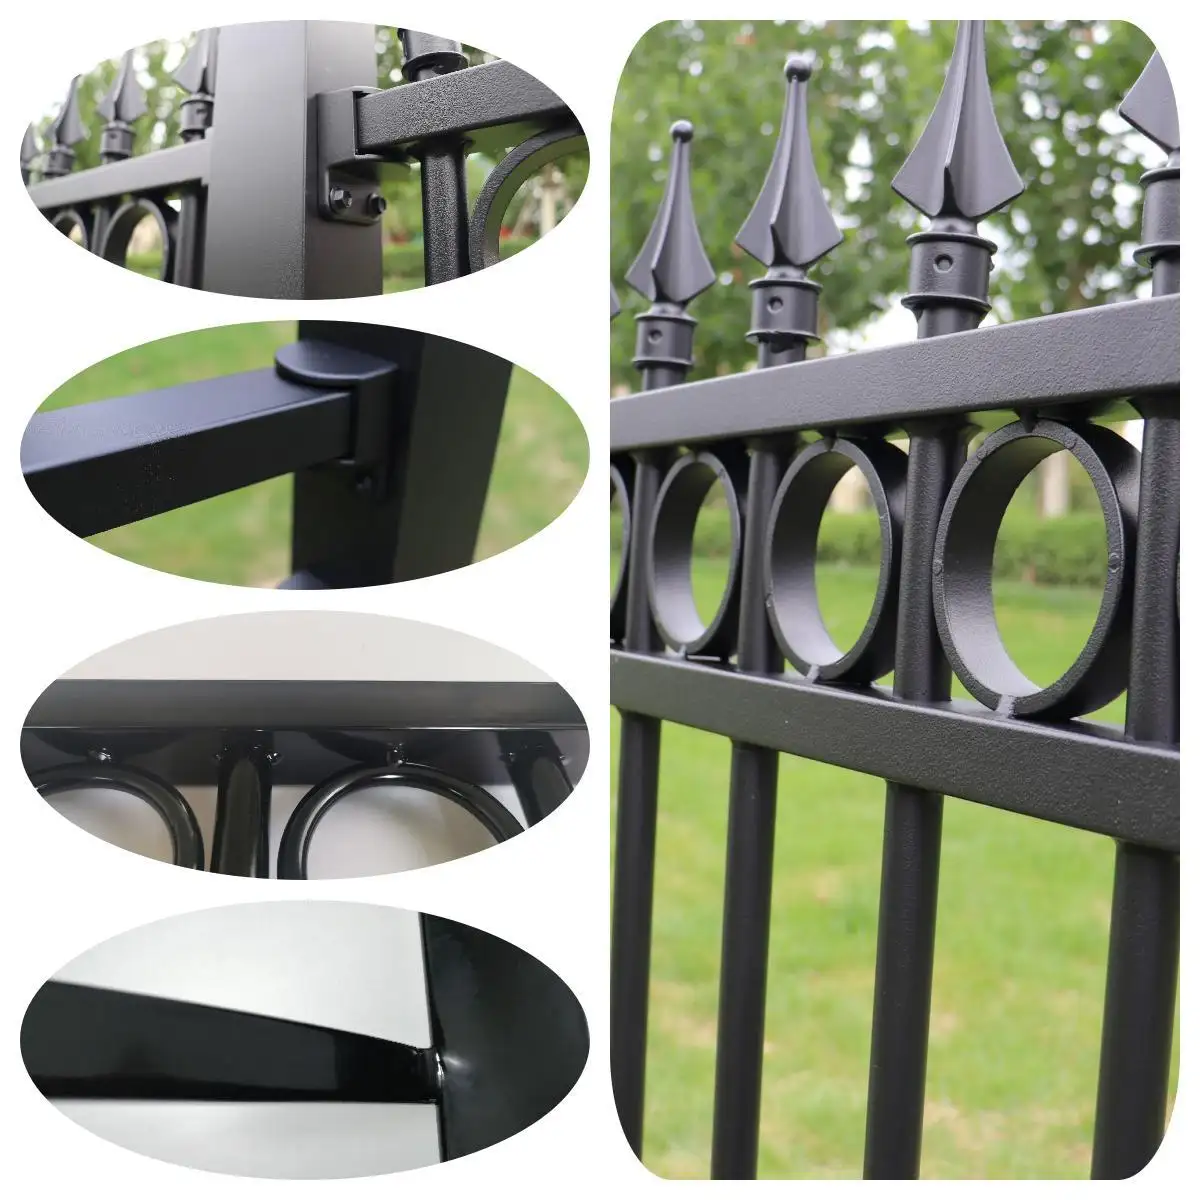 America 6 Foot 3x3 Metal Garden Iron Fence Panels Outdoor Metal Steel tubular Fences Modern Wrought Iron Zinc Steel Fence